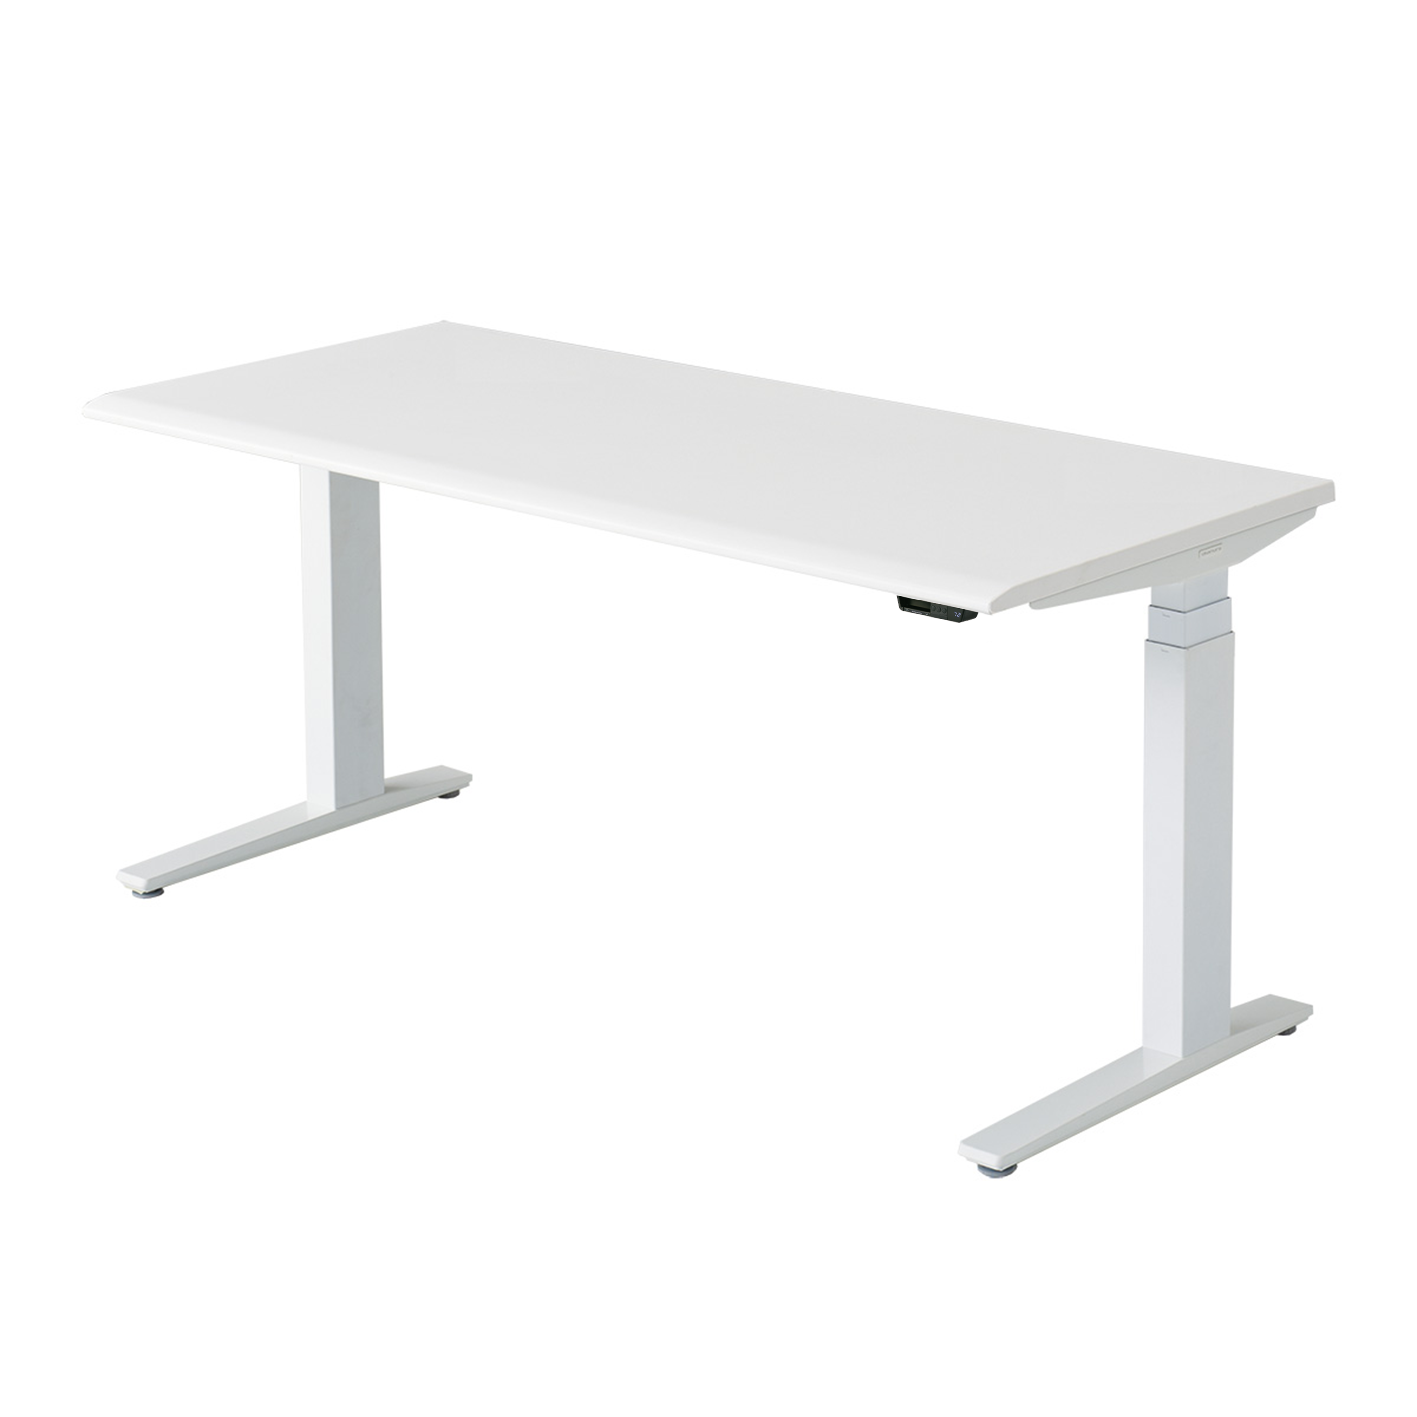 White height adjustable desk for study room